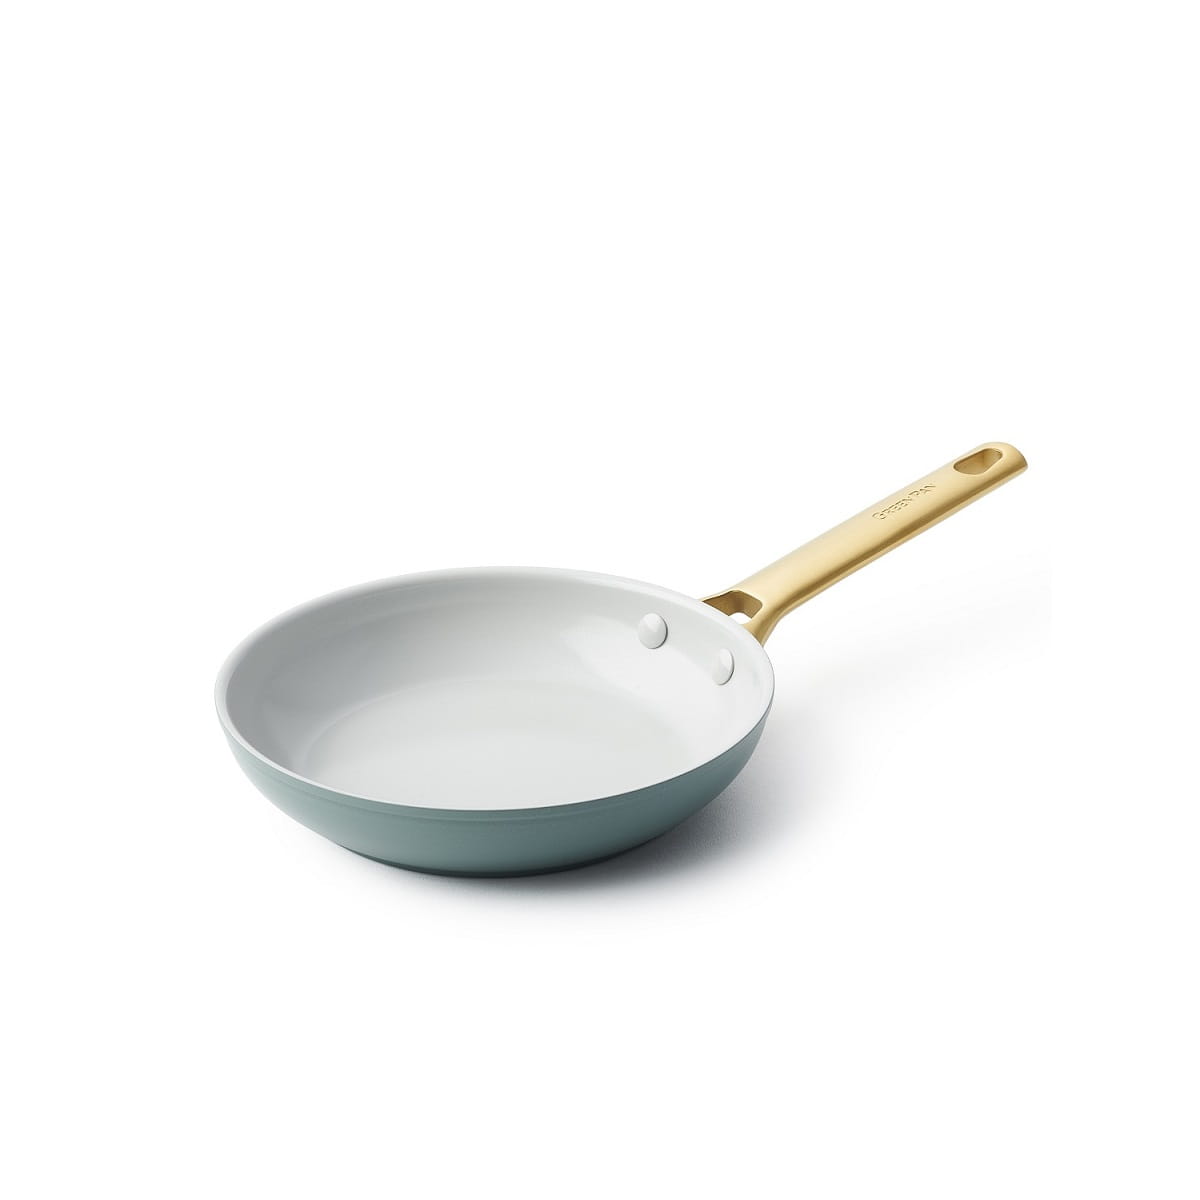 CC003713-001 - Padova Frying Pan, Smokey Sky Blue - 20cm - Product Image 1